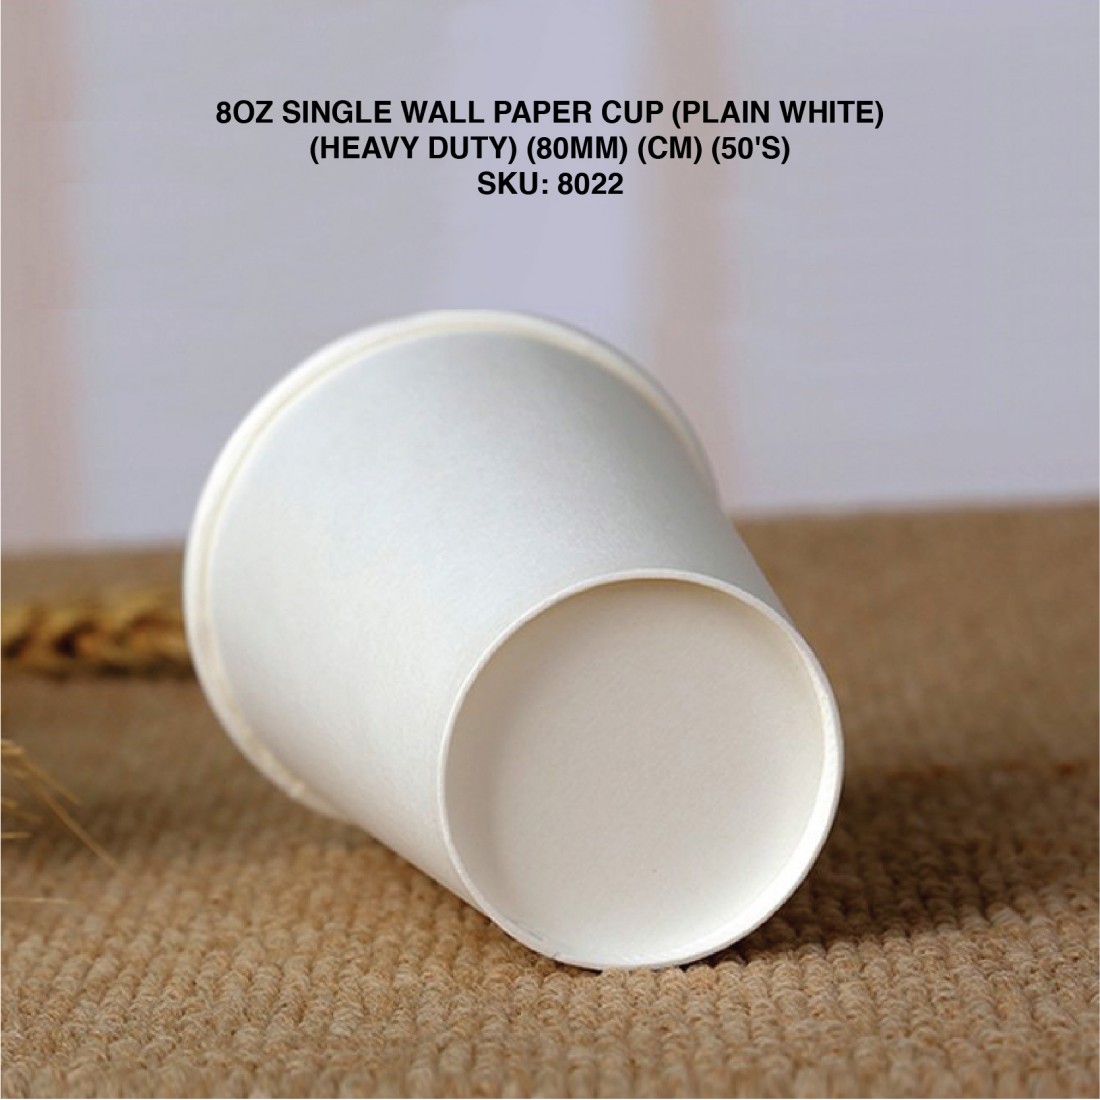 8OZ SINGLE WALL PAPER CUP (PLAIN WHITE) (HEAVY DUTY) (80MM) (CM) (50'S)